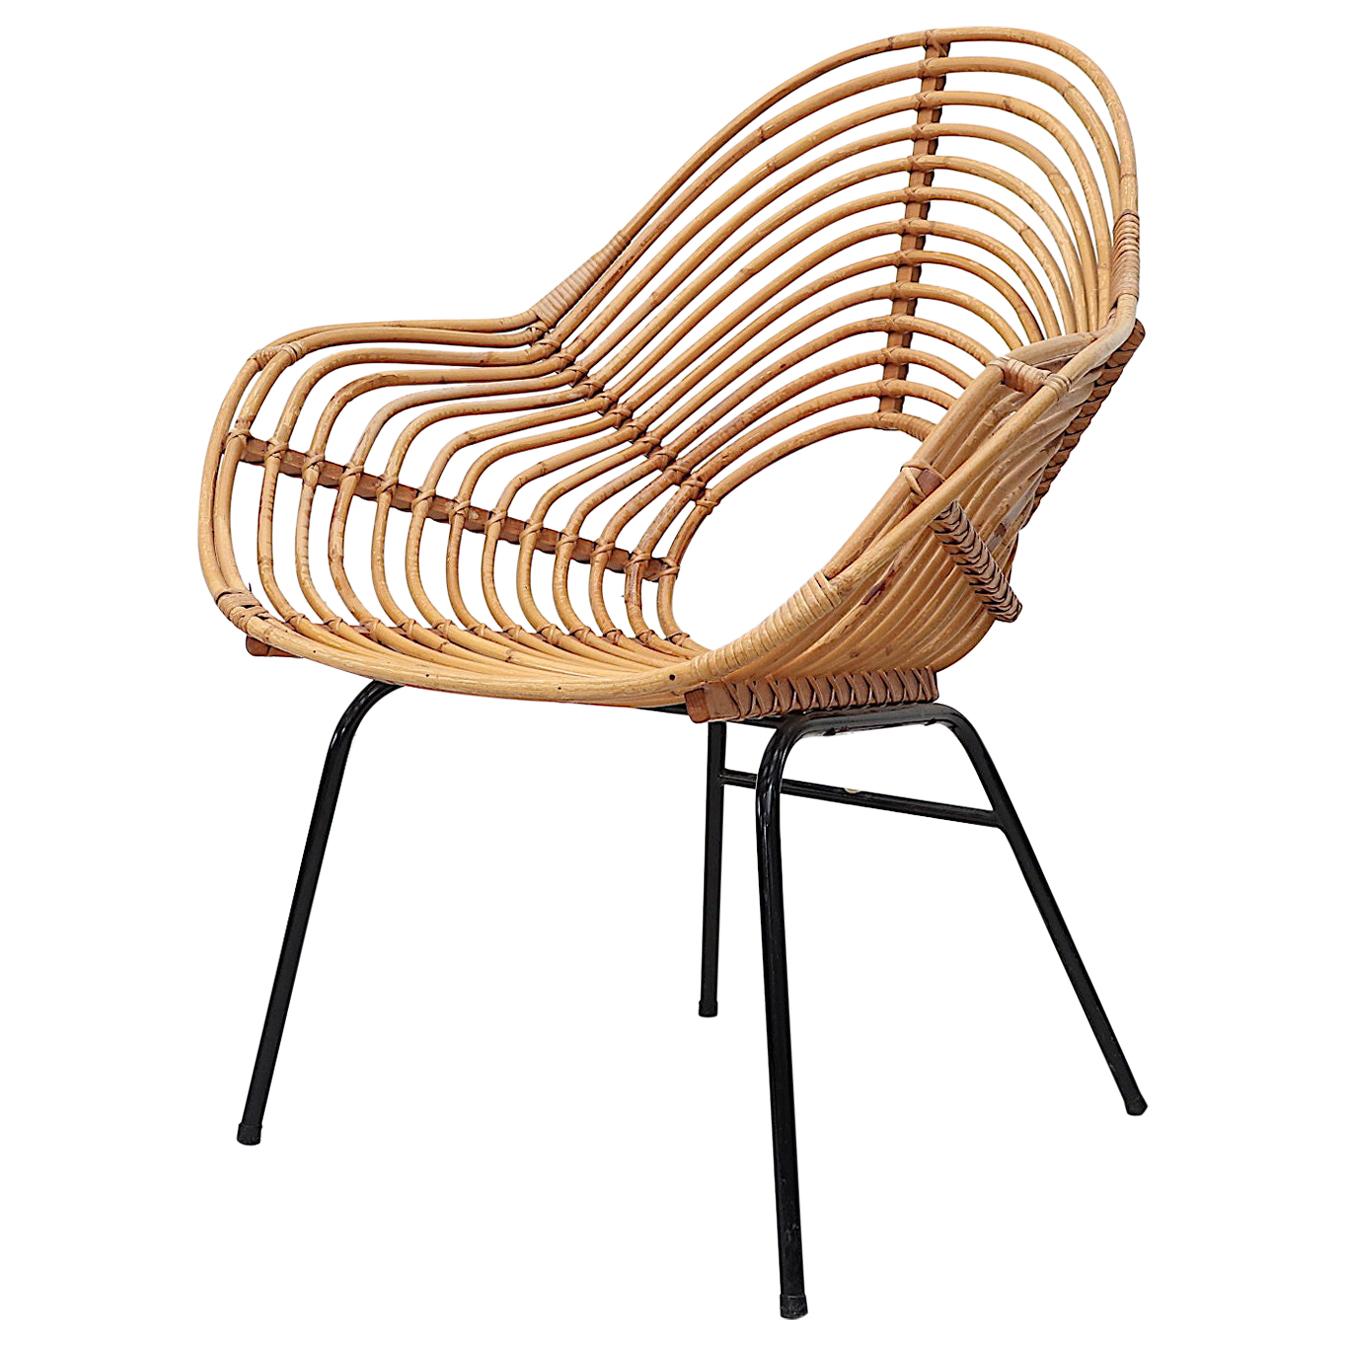 Rohe Noordwolde Onion Skin Patterened Bamboo Hoop Chair